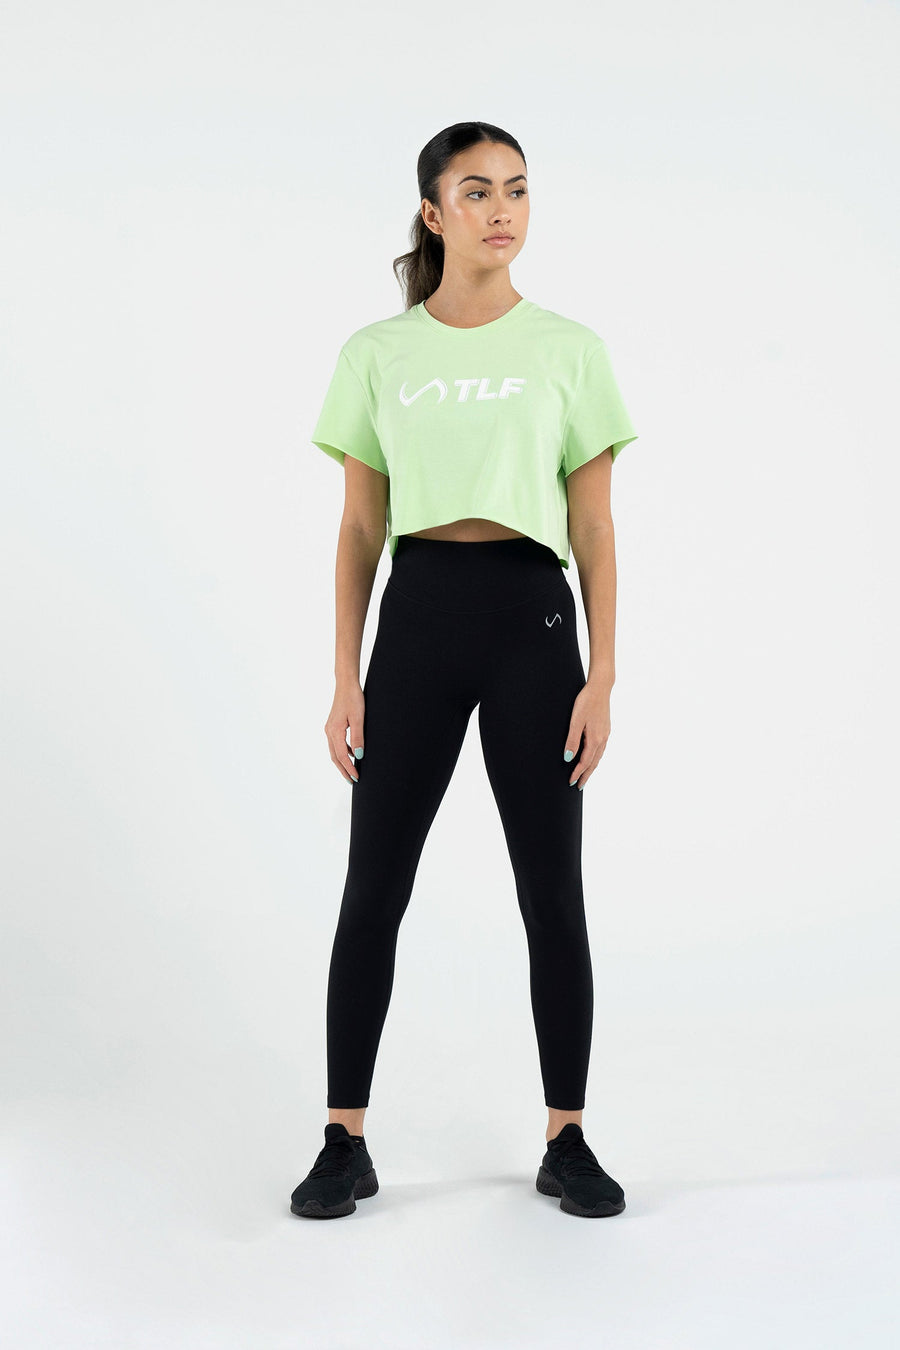 3-D Gym Crop Tee - Women's Workout Crop Tops - Neon - Lime - 5